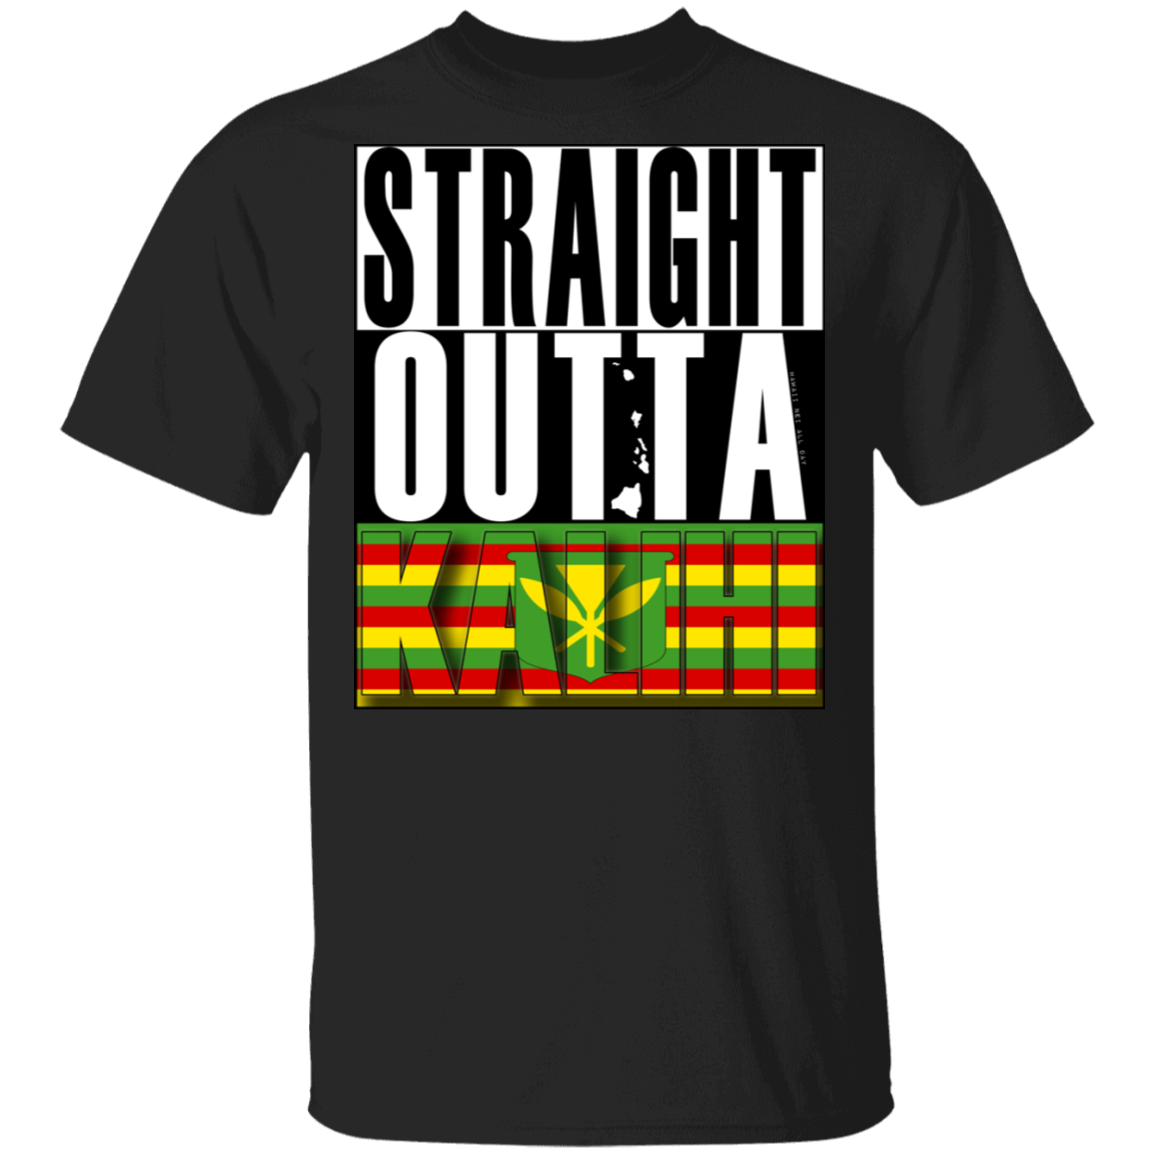 Straight Outta Kalihi (Kanaka Maoli) T-Shirt, T-Shirts, Hawaii Nei All Day